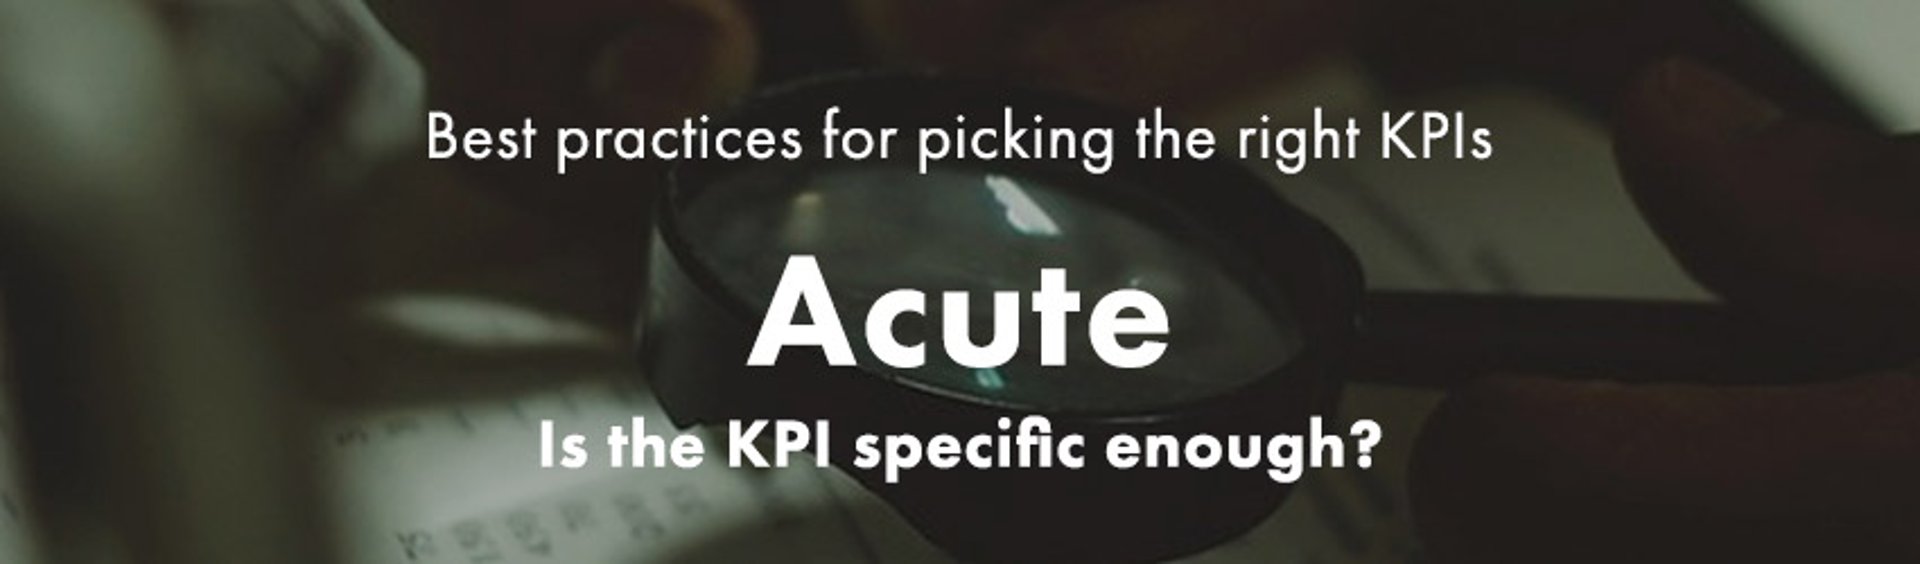 Picking Kpis Best Practices Acute